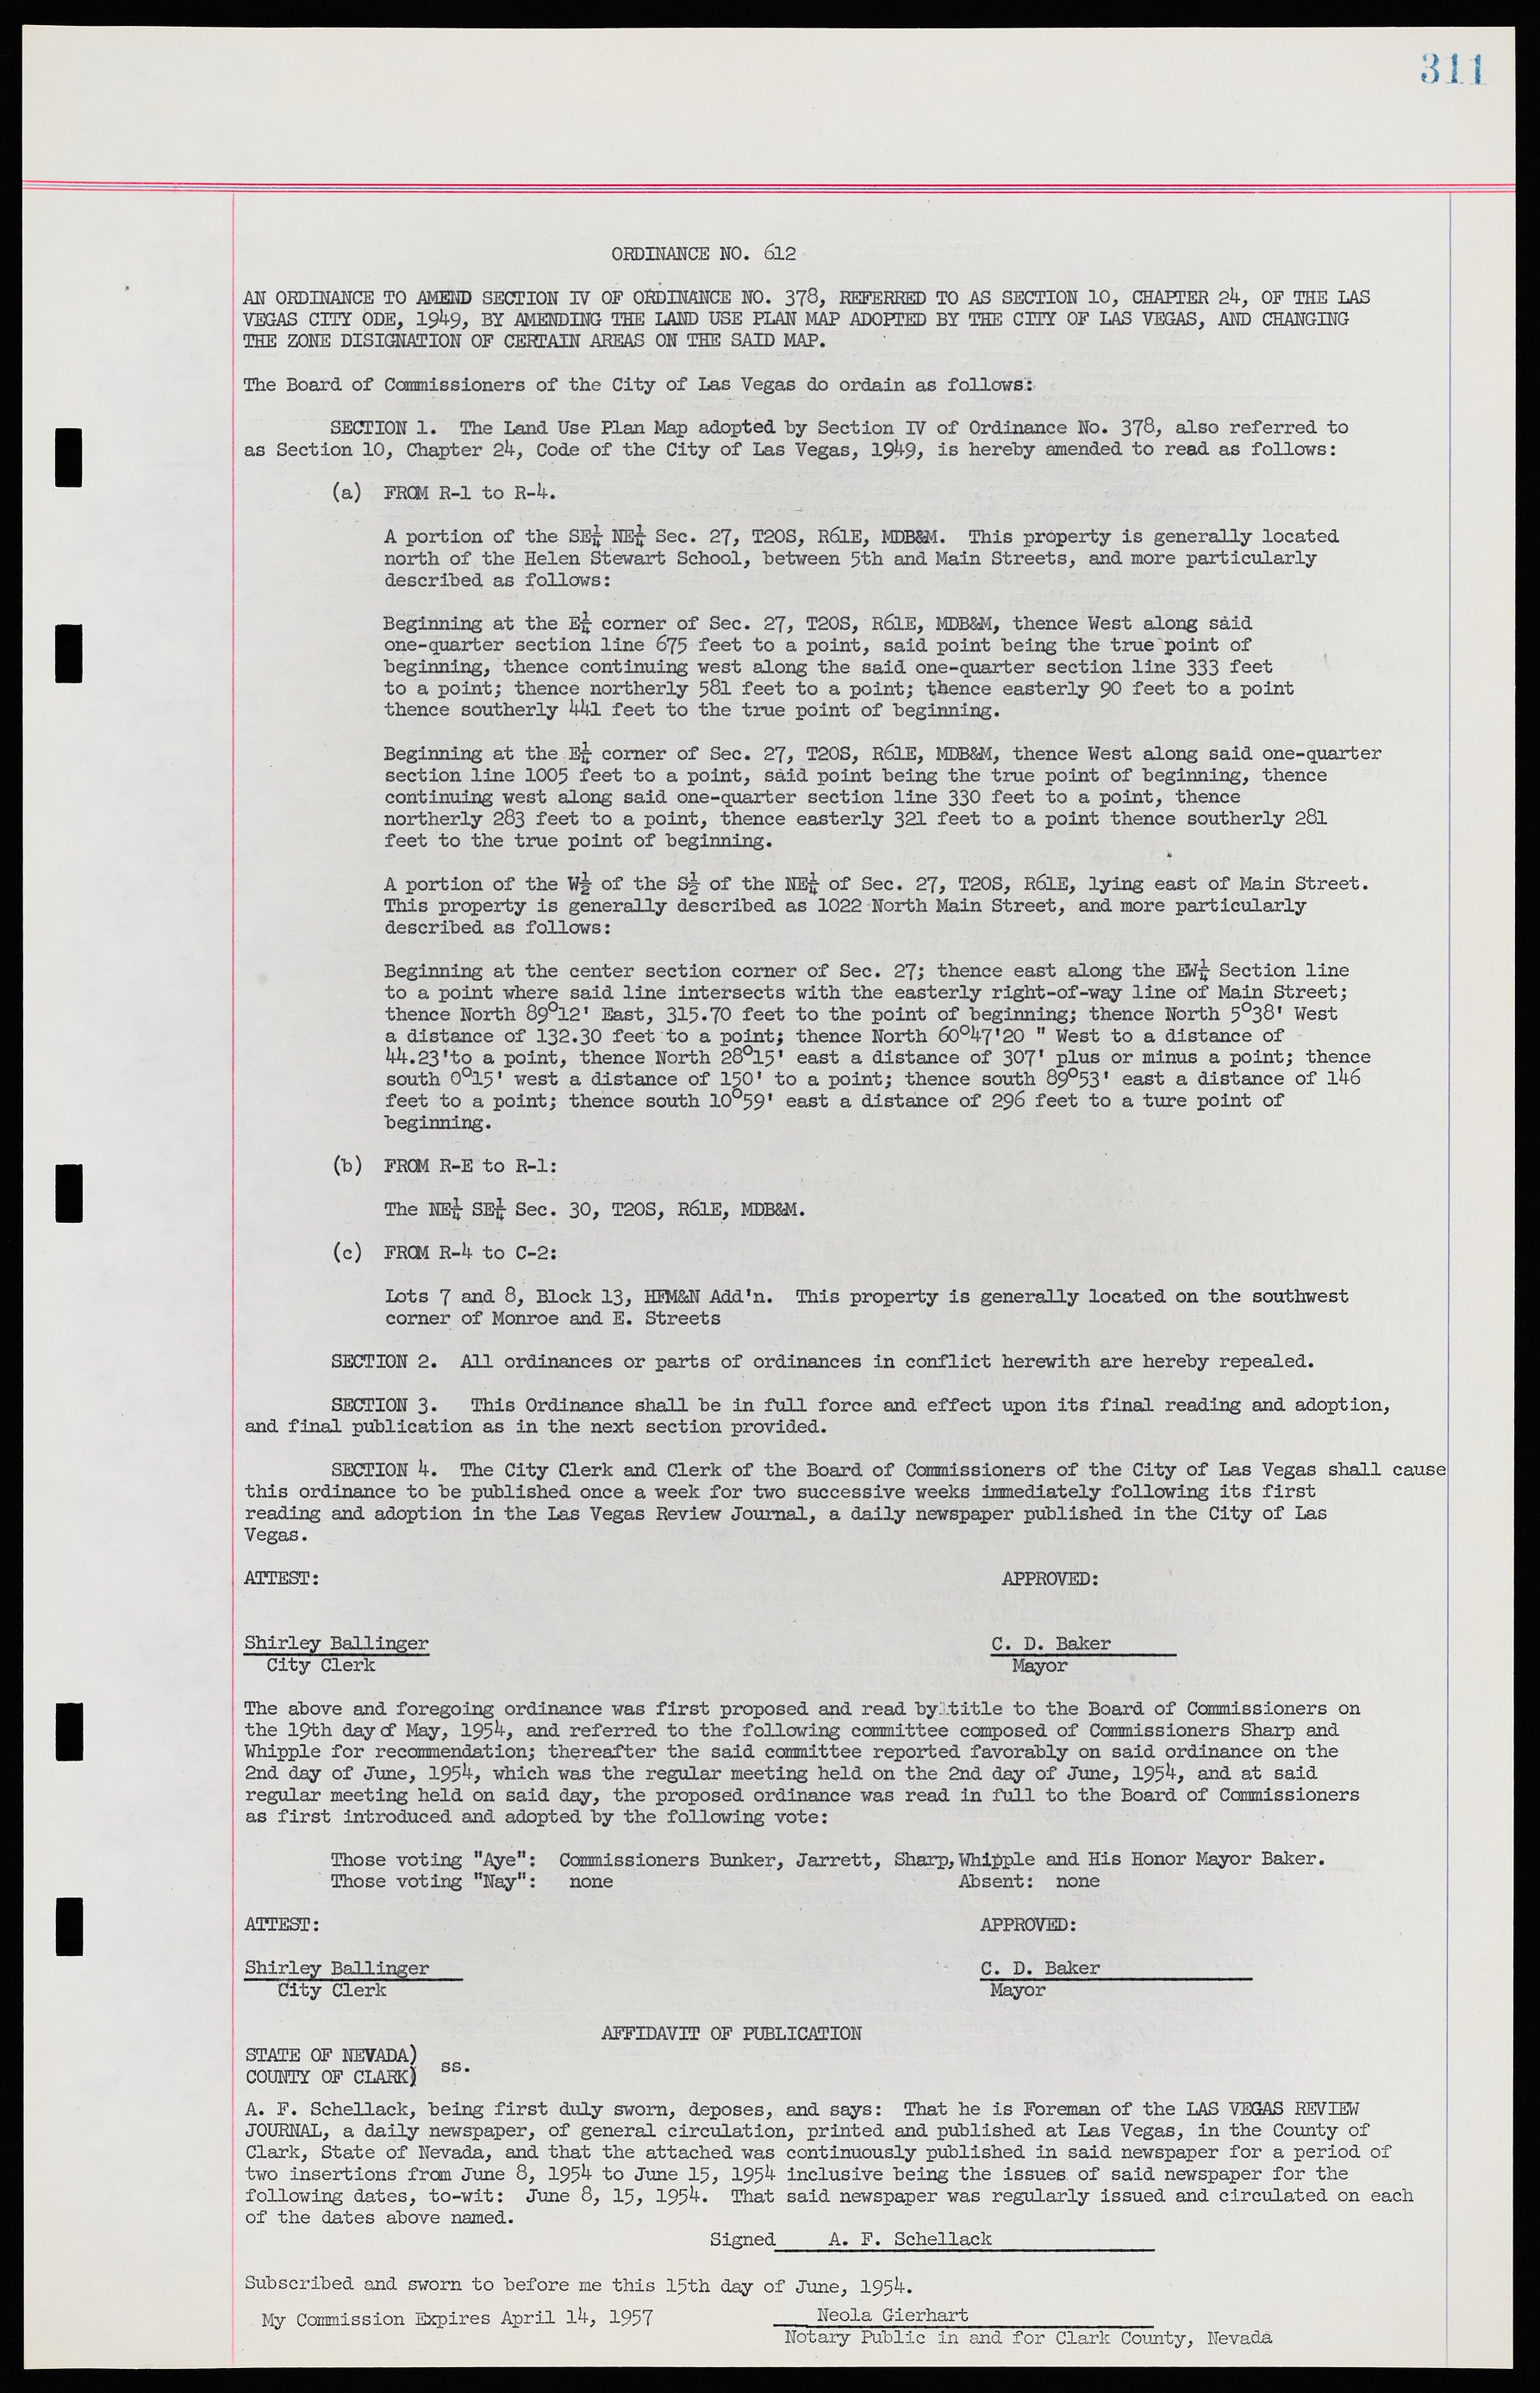 Las Vegas City Ordinances, November 13, 1950 to August 6, 1958, lvc000015-319